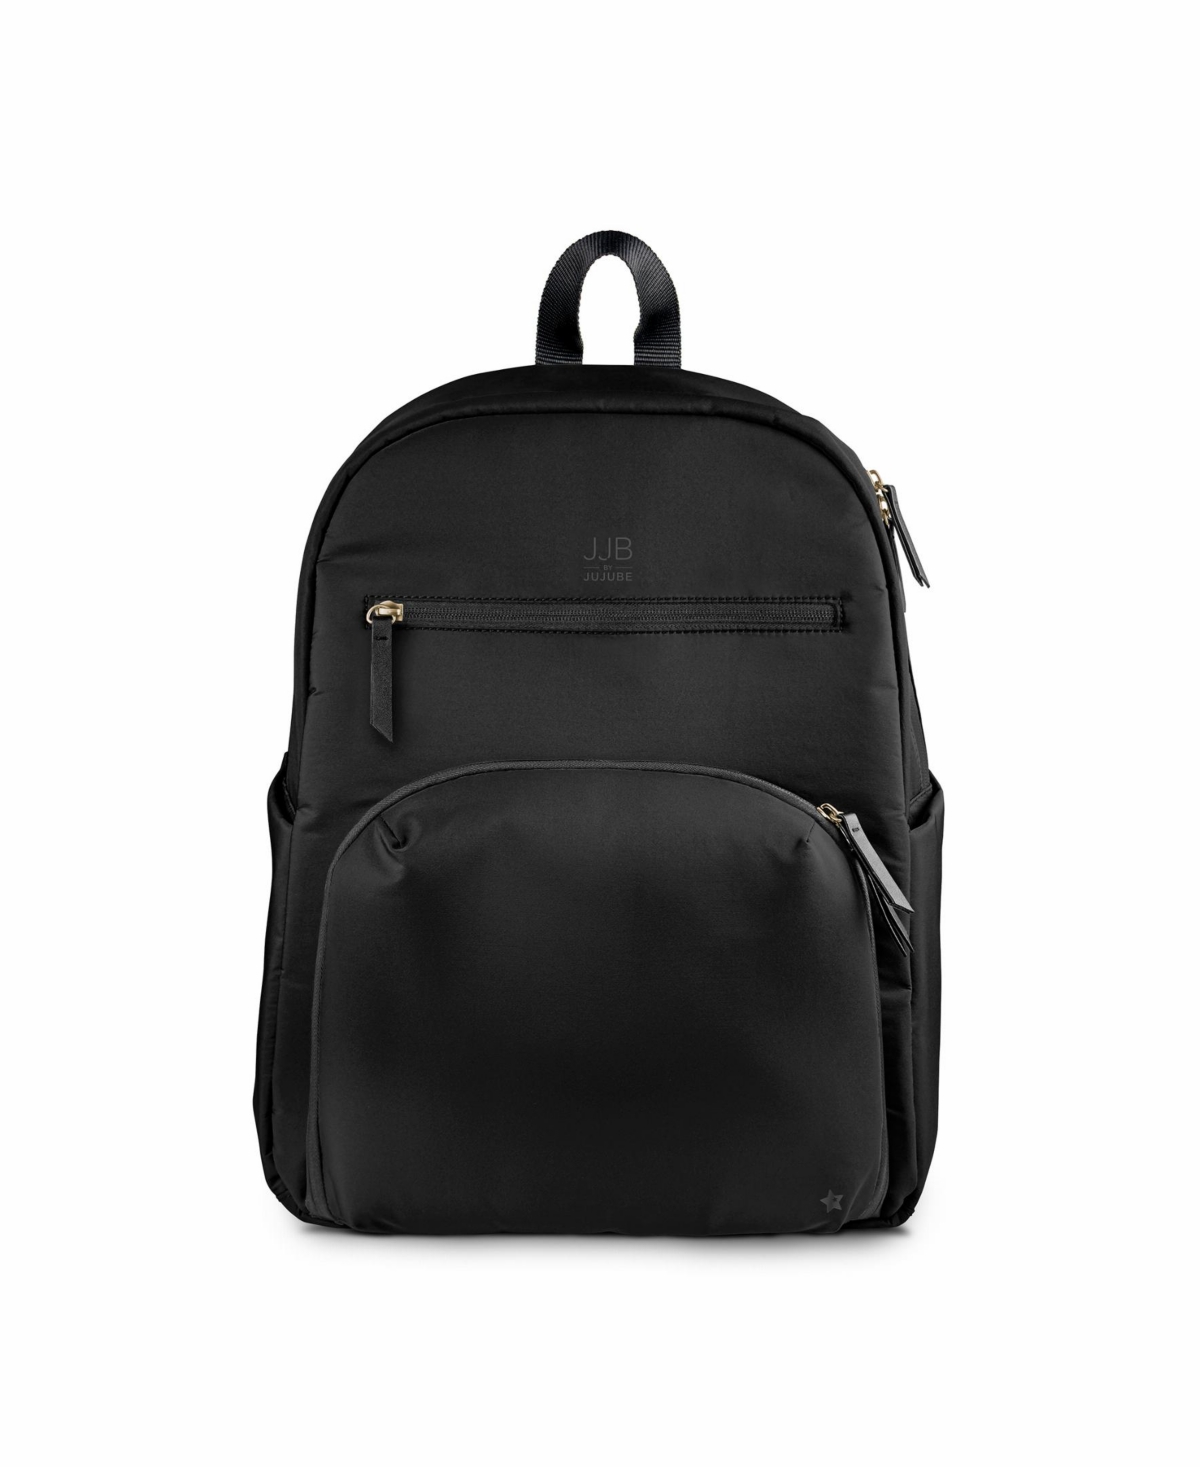 Ju-ju-be Deluxe Backpack In Black